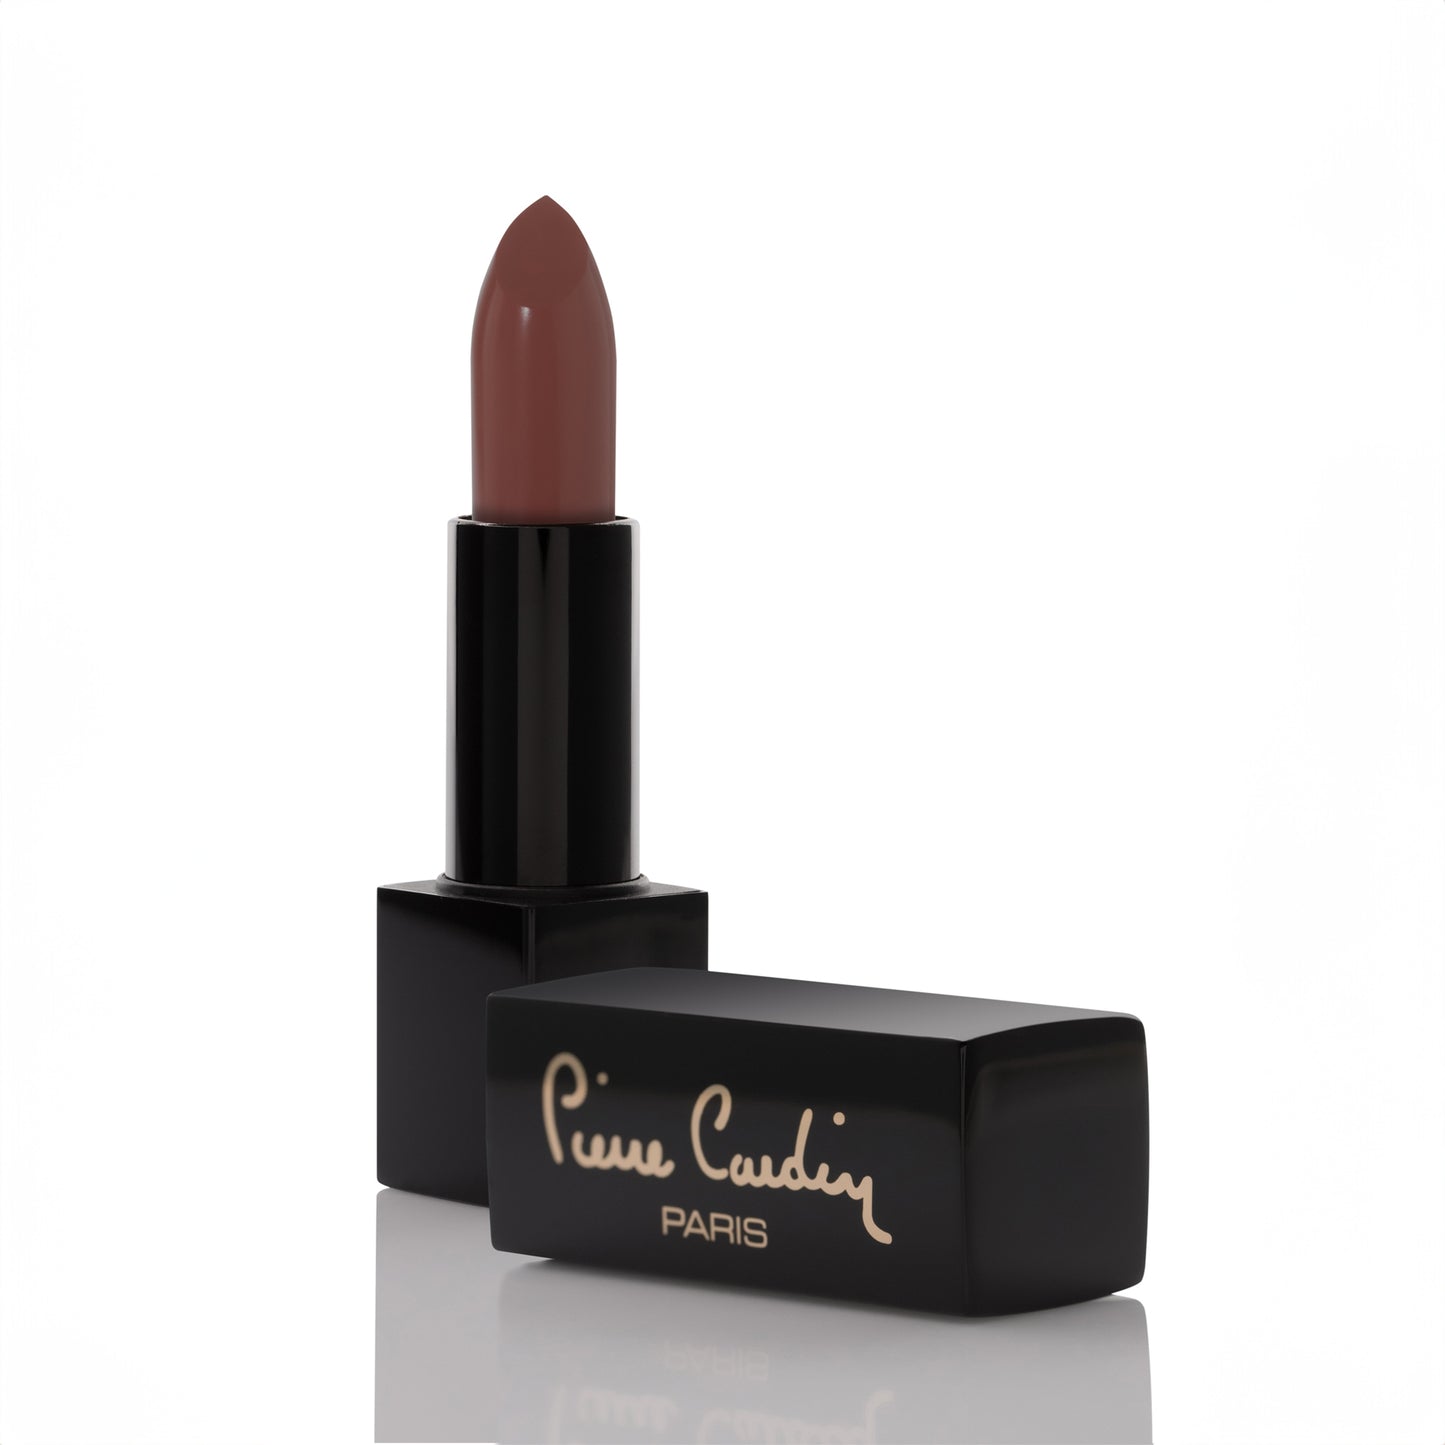 Pierre Cardin Retro Matte Lipstick  Rustic Red 147 - 4 gr